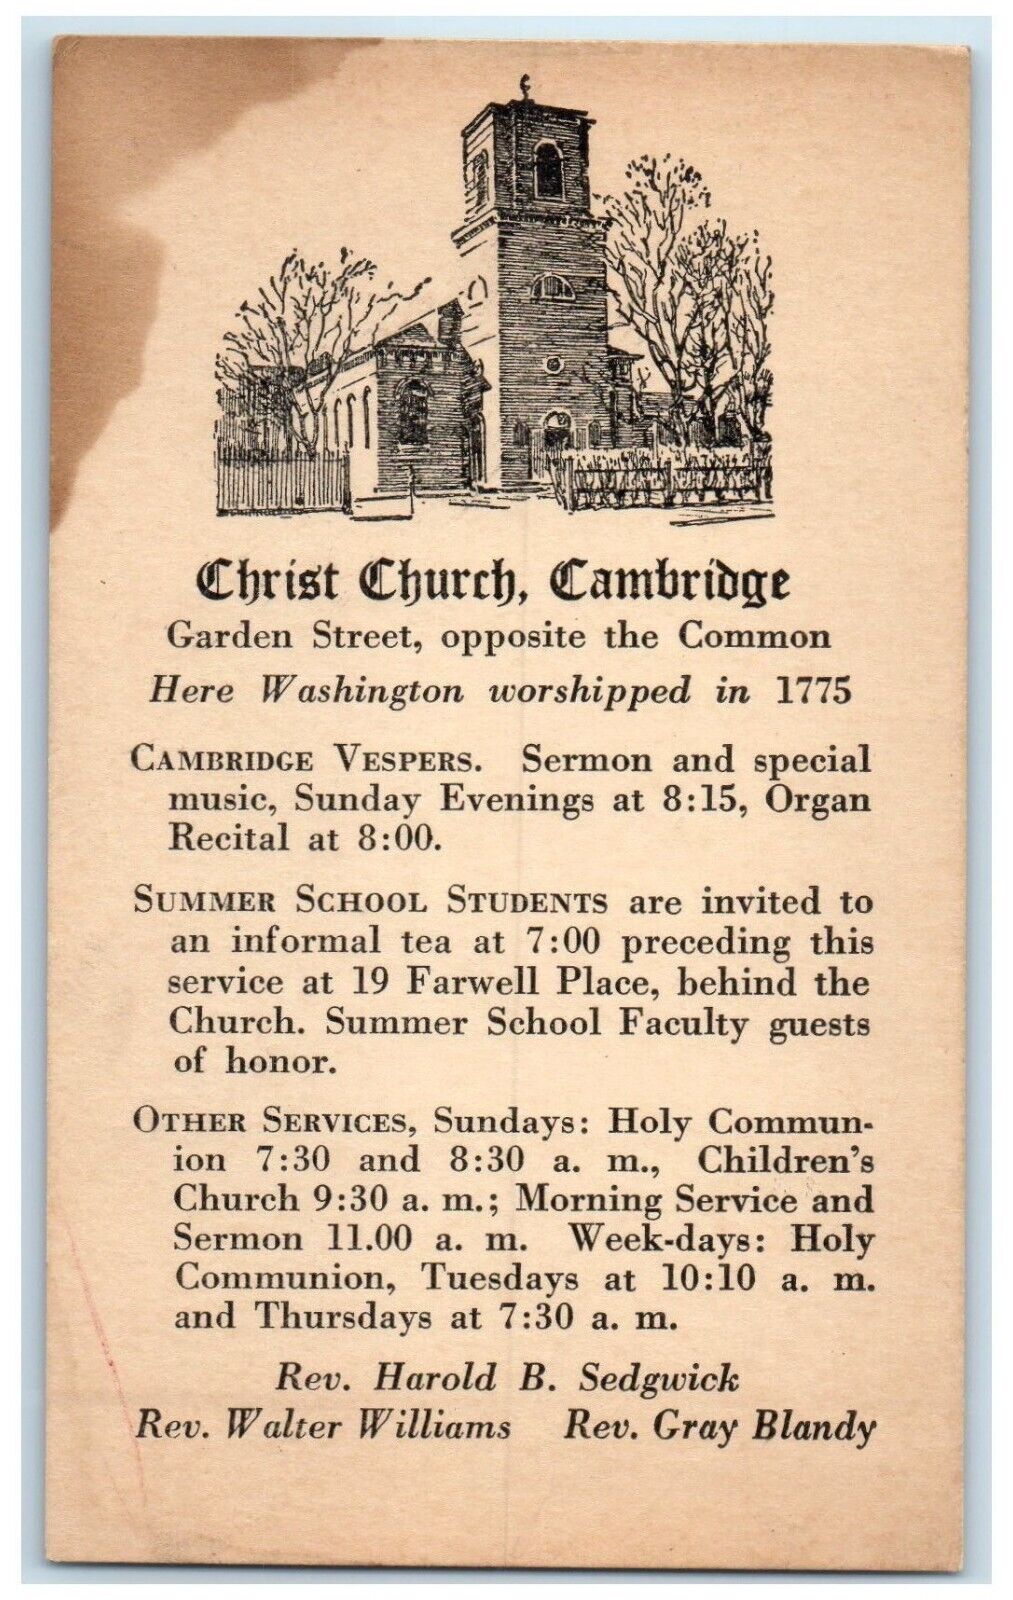 c1940 Christ Church Cambridge Garden Street Washington Vintage Antique Postcard